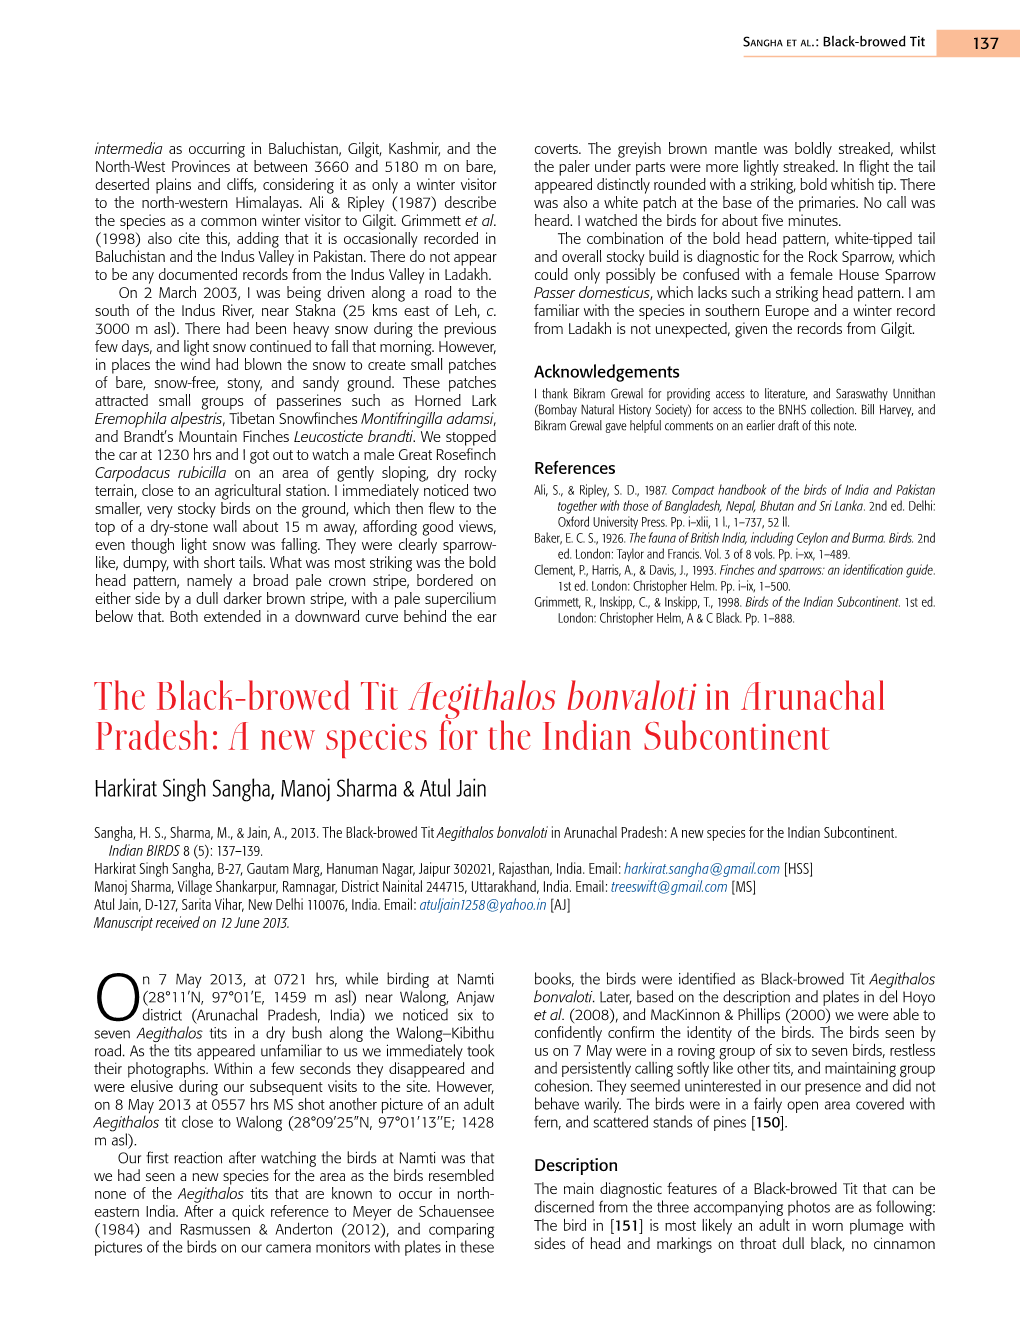 The Black-Browed Tit Aegithalos Bonvaloti in Arunachal Pradesh: a New Species for the Indian Subcontinent Harkirat Singh Sangha, Manoj Sharma & Atul Jain